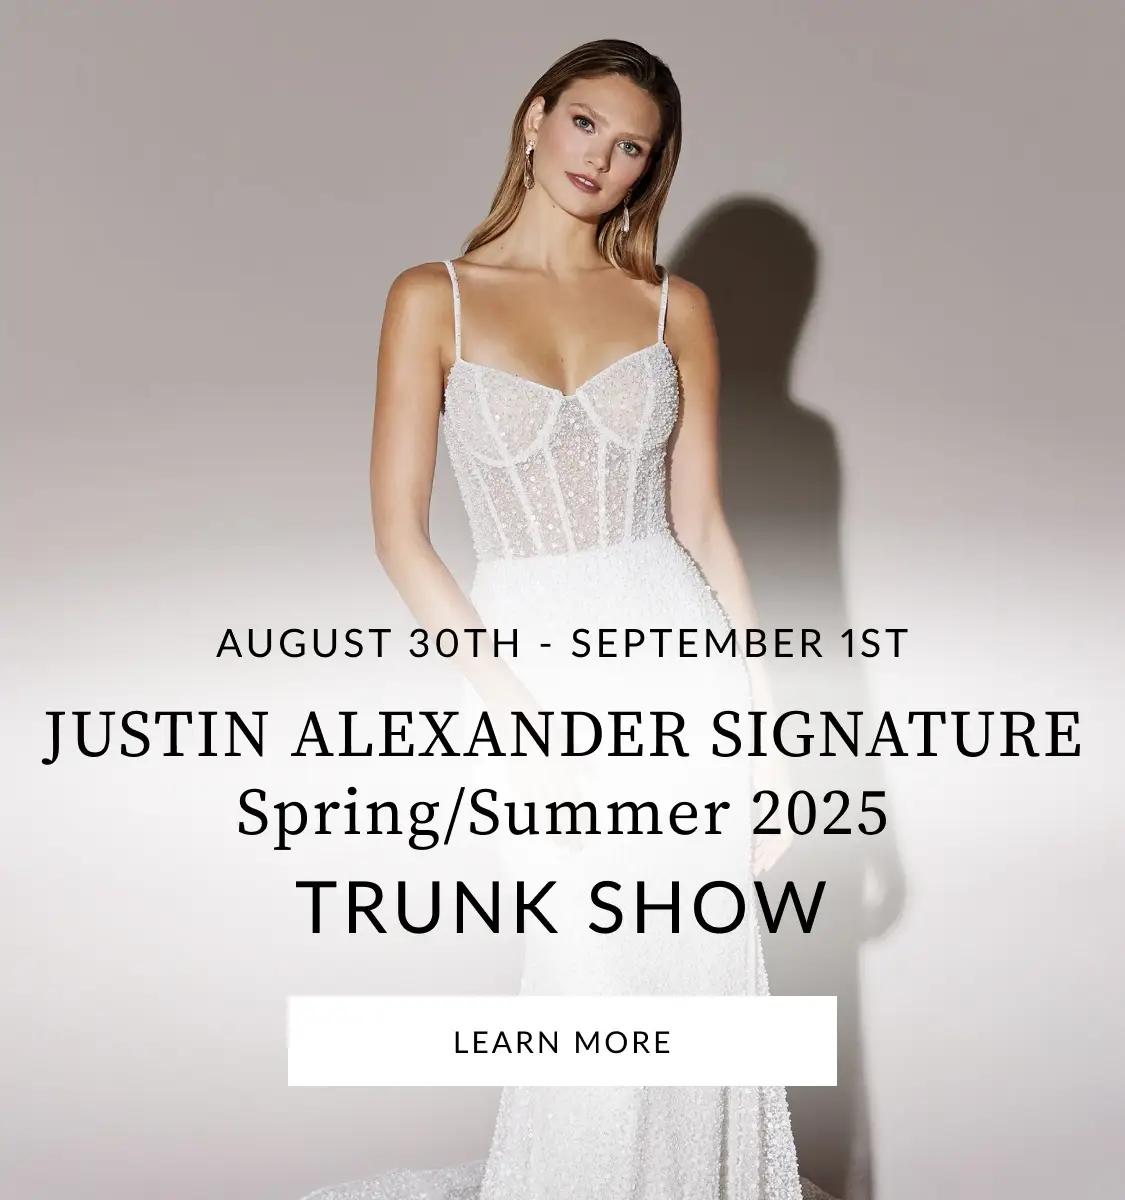 Spring/Summer 2025 Justin Alexander Signature Trunk Show